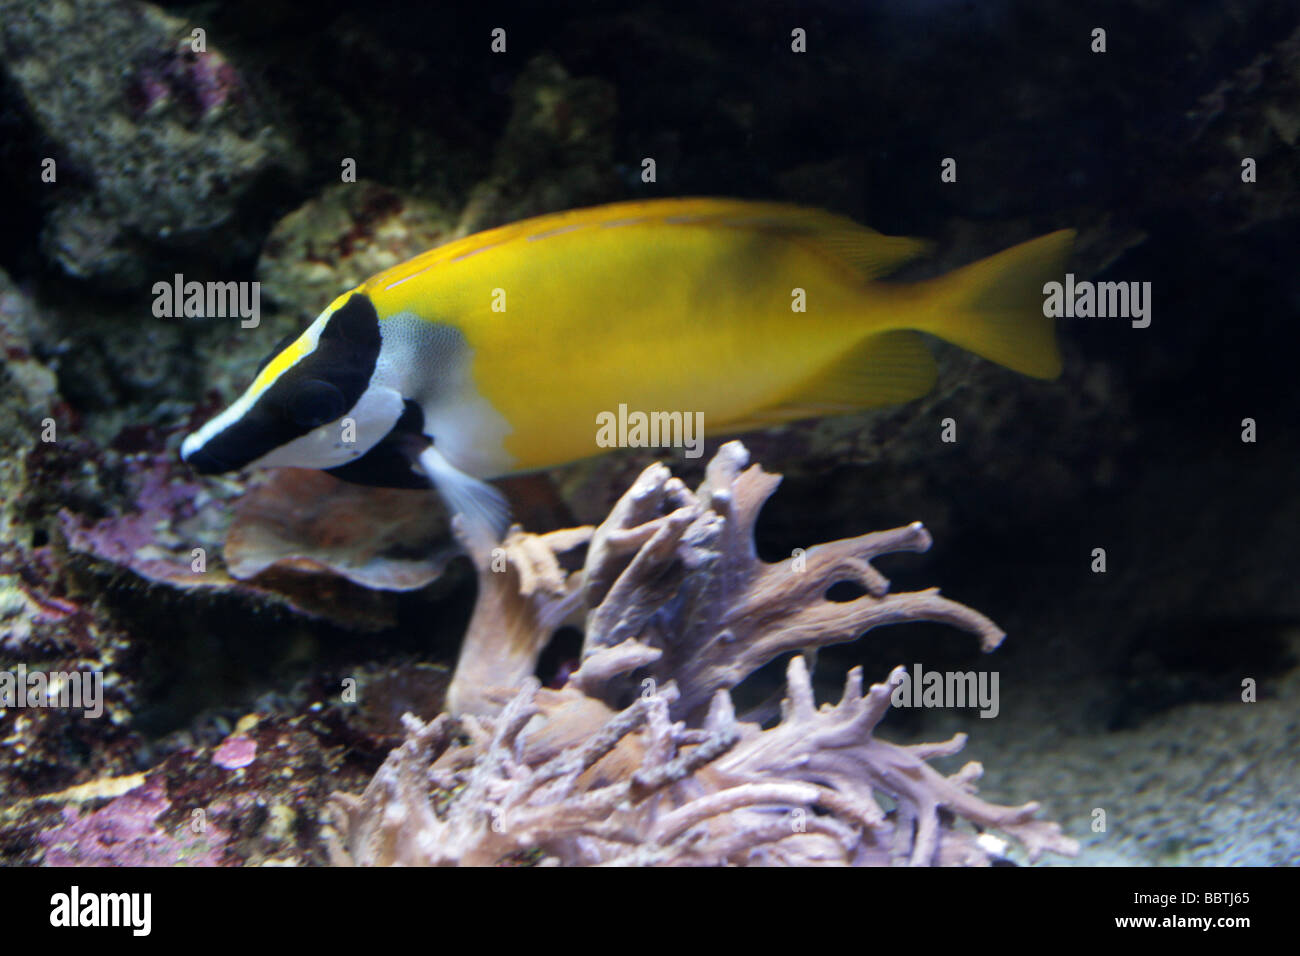 Foxface Rabbitfish, Siganus vulpinus, Siganidae, Perciformes. Yellow Tropical Marine Fish from the West Pacific Ocean. Stock Photo